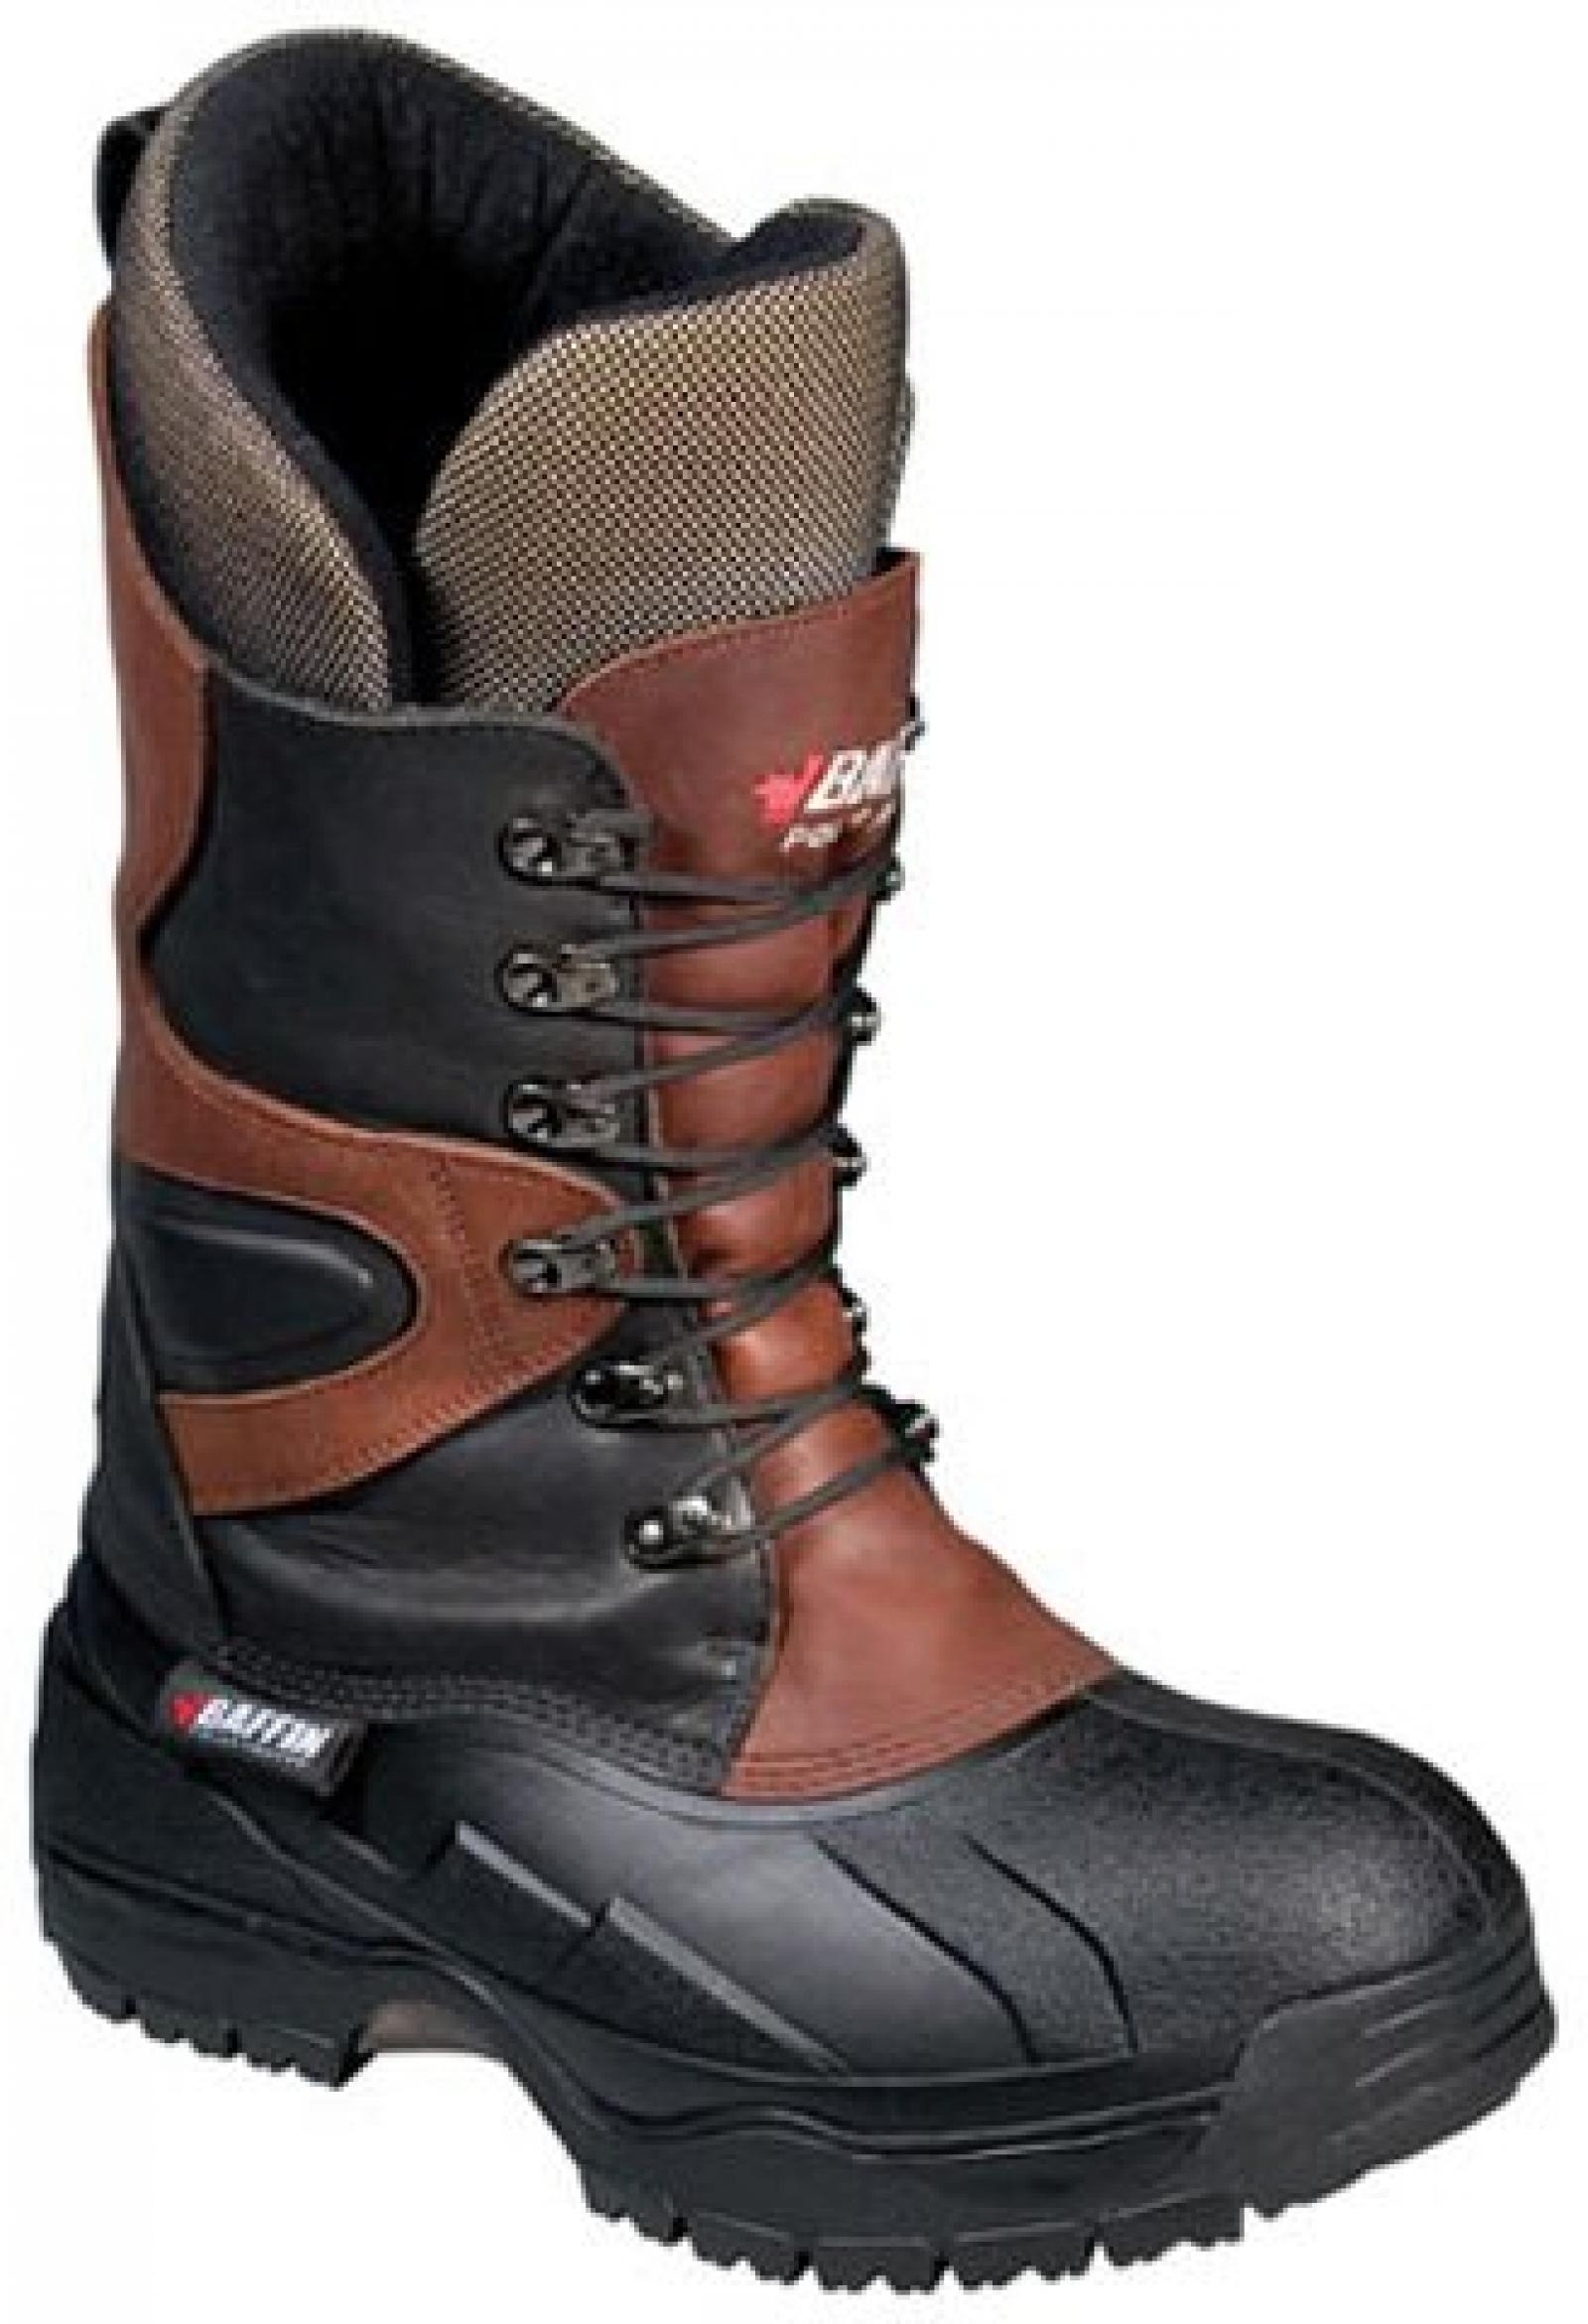 Baffin Apex Leather Boot (9) Black/Bark 